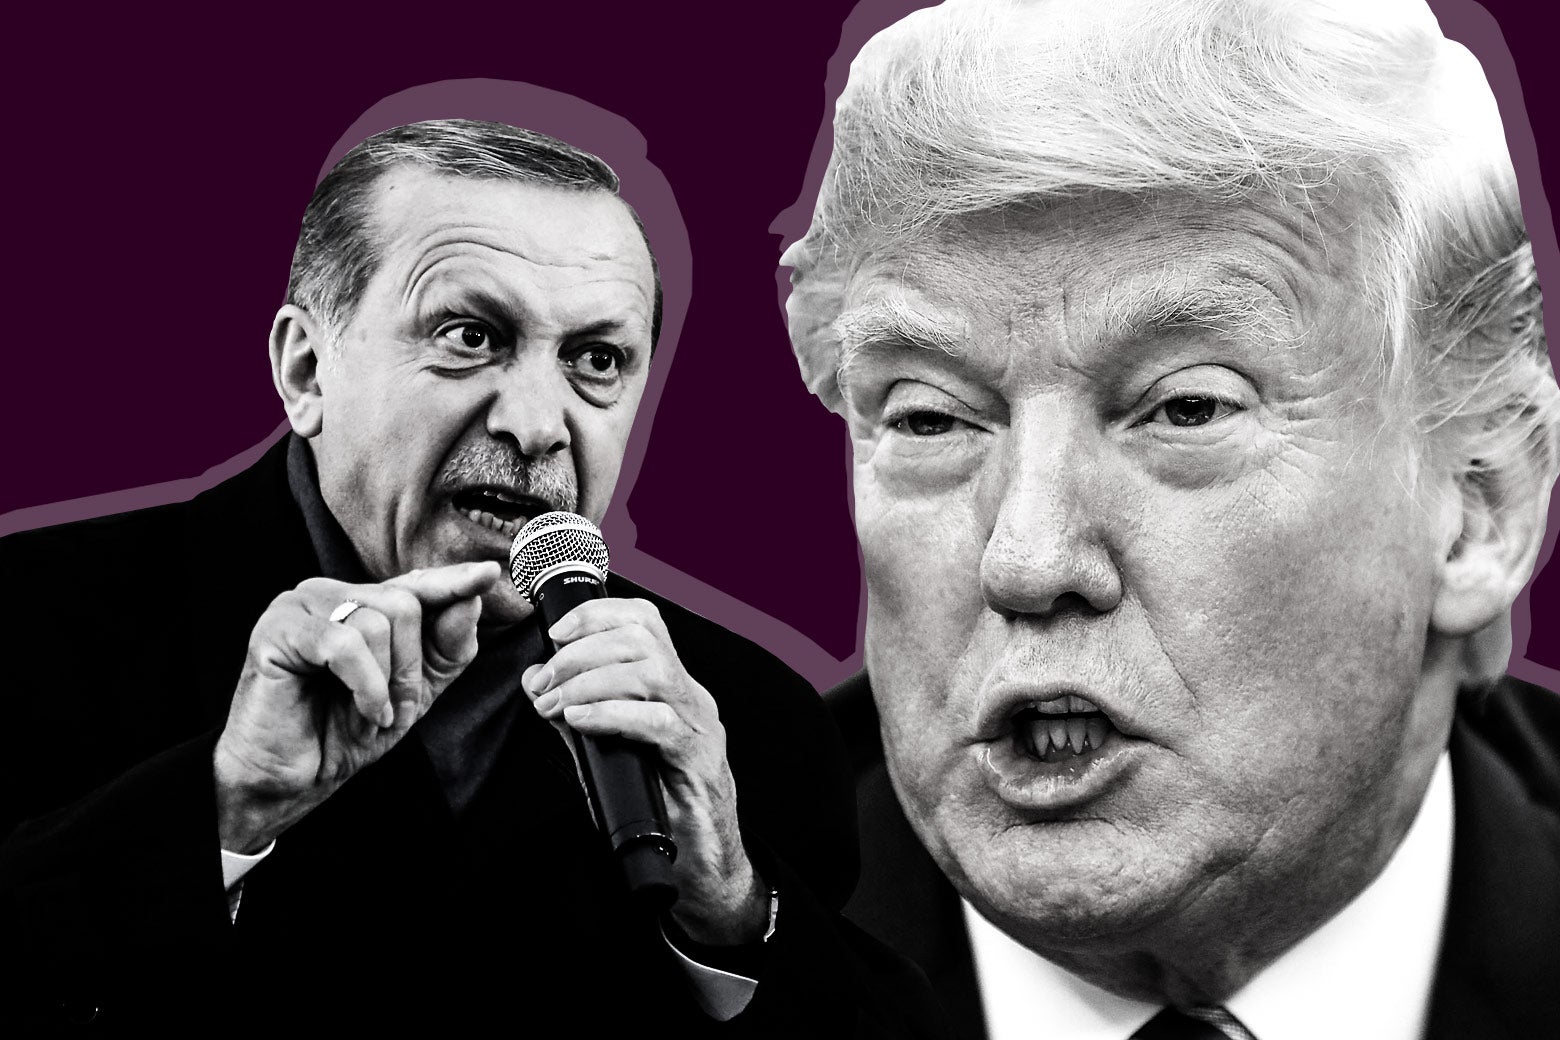 Turkish President Recep Tayyip Erdogan and U.S. President Donald Trump.